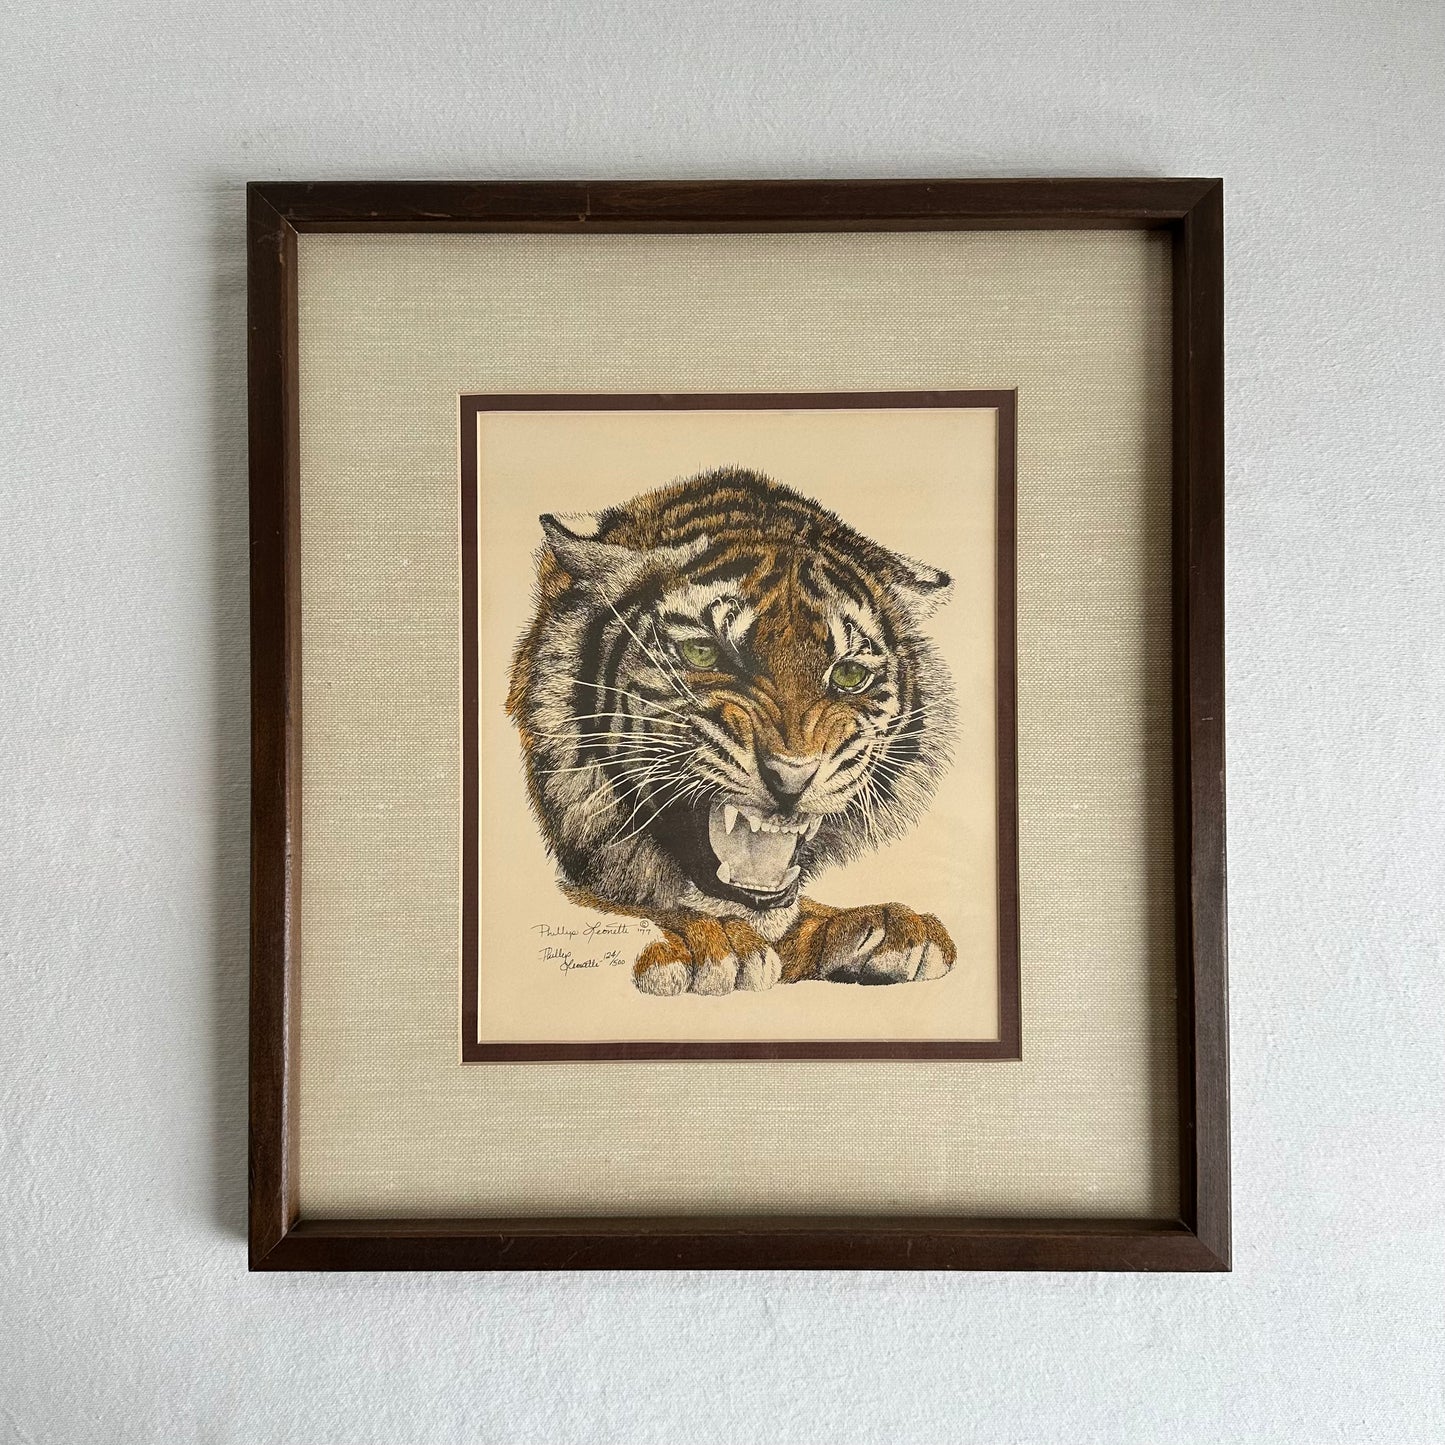 Framed Philip Leonetti original, signed litho tiger print